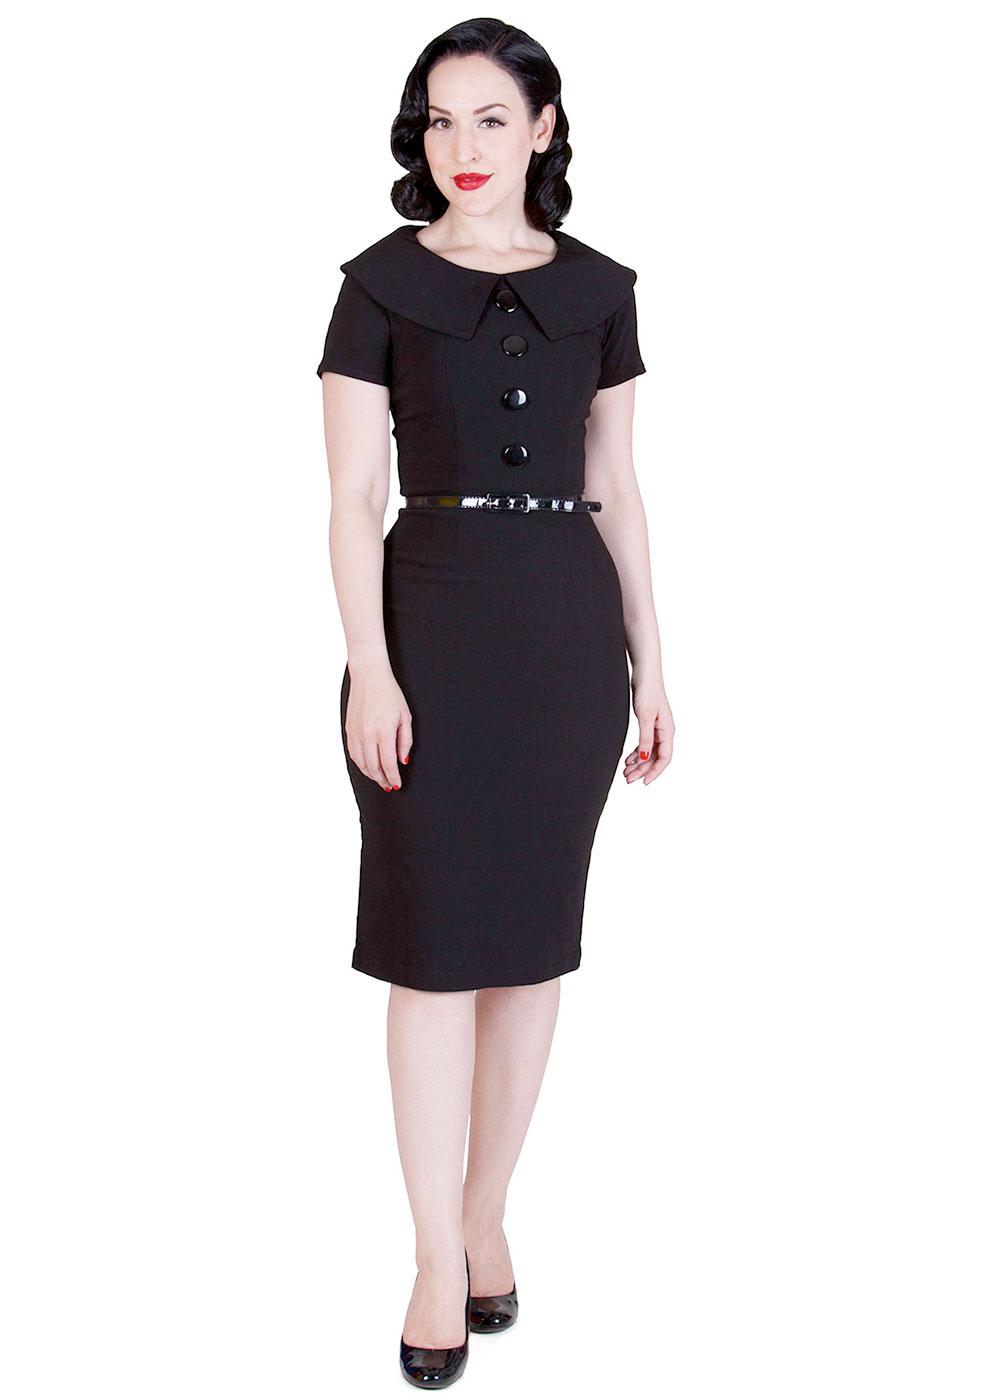 Tatyana Rita Reftro Fifties Vintage Style Pencil Dress in Black